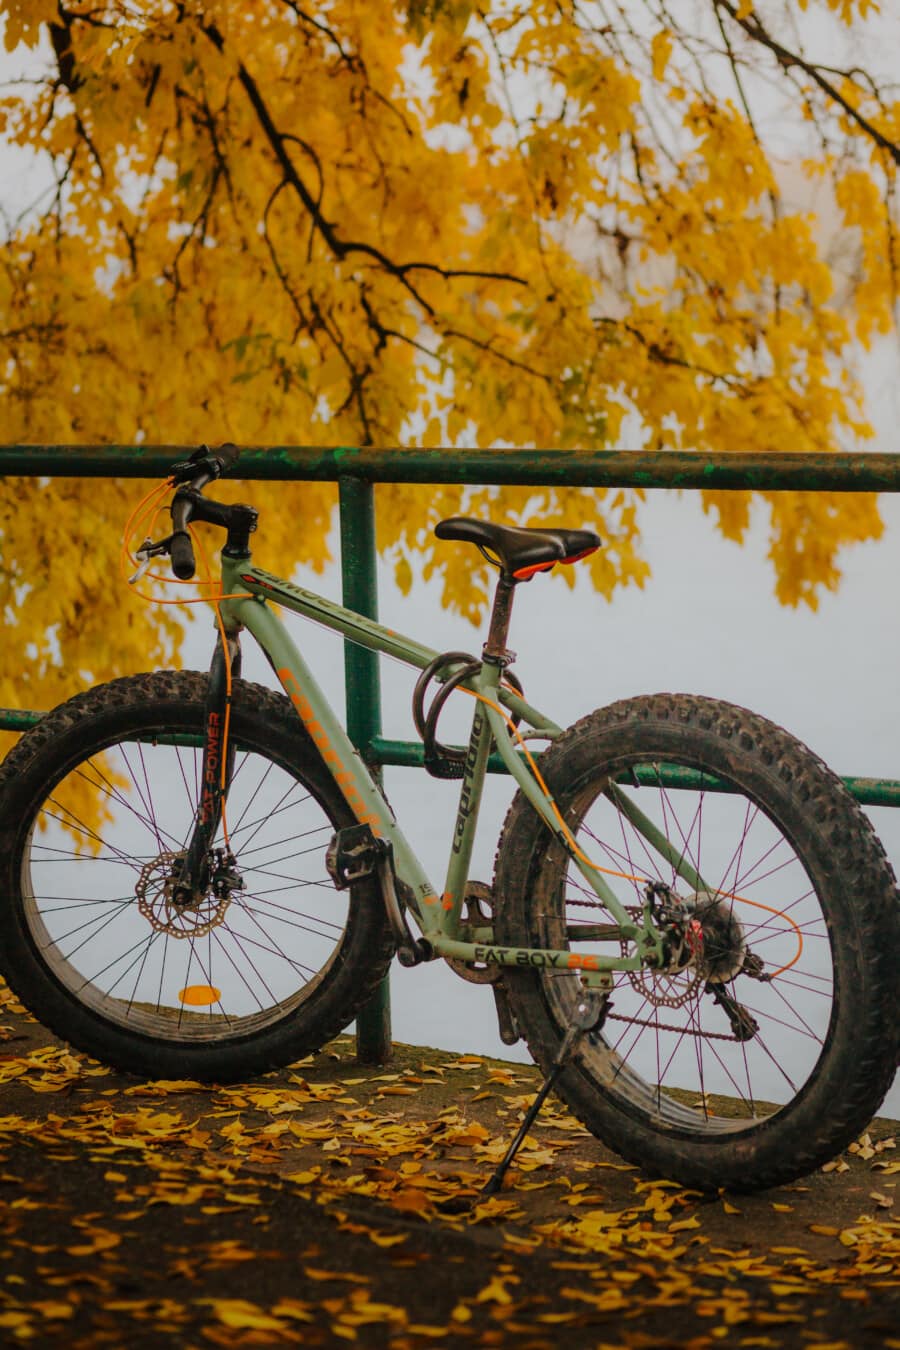 xe đạp leo núi, lốp xe, bánh xe, lớn, mùa thu mùa, xe đạp, xe đạp, bánh xe, ngoài trời, cây